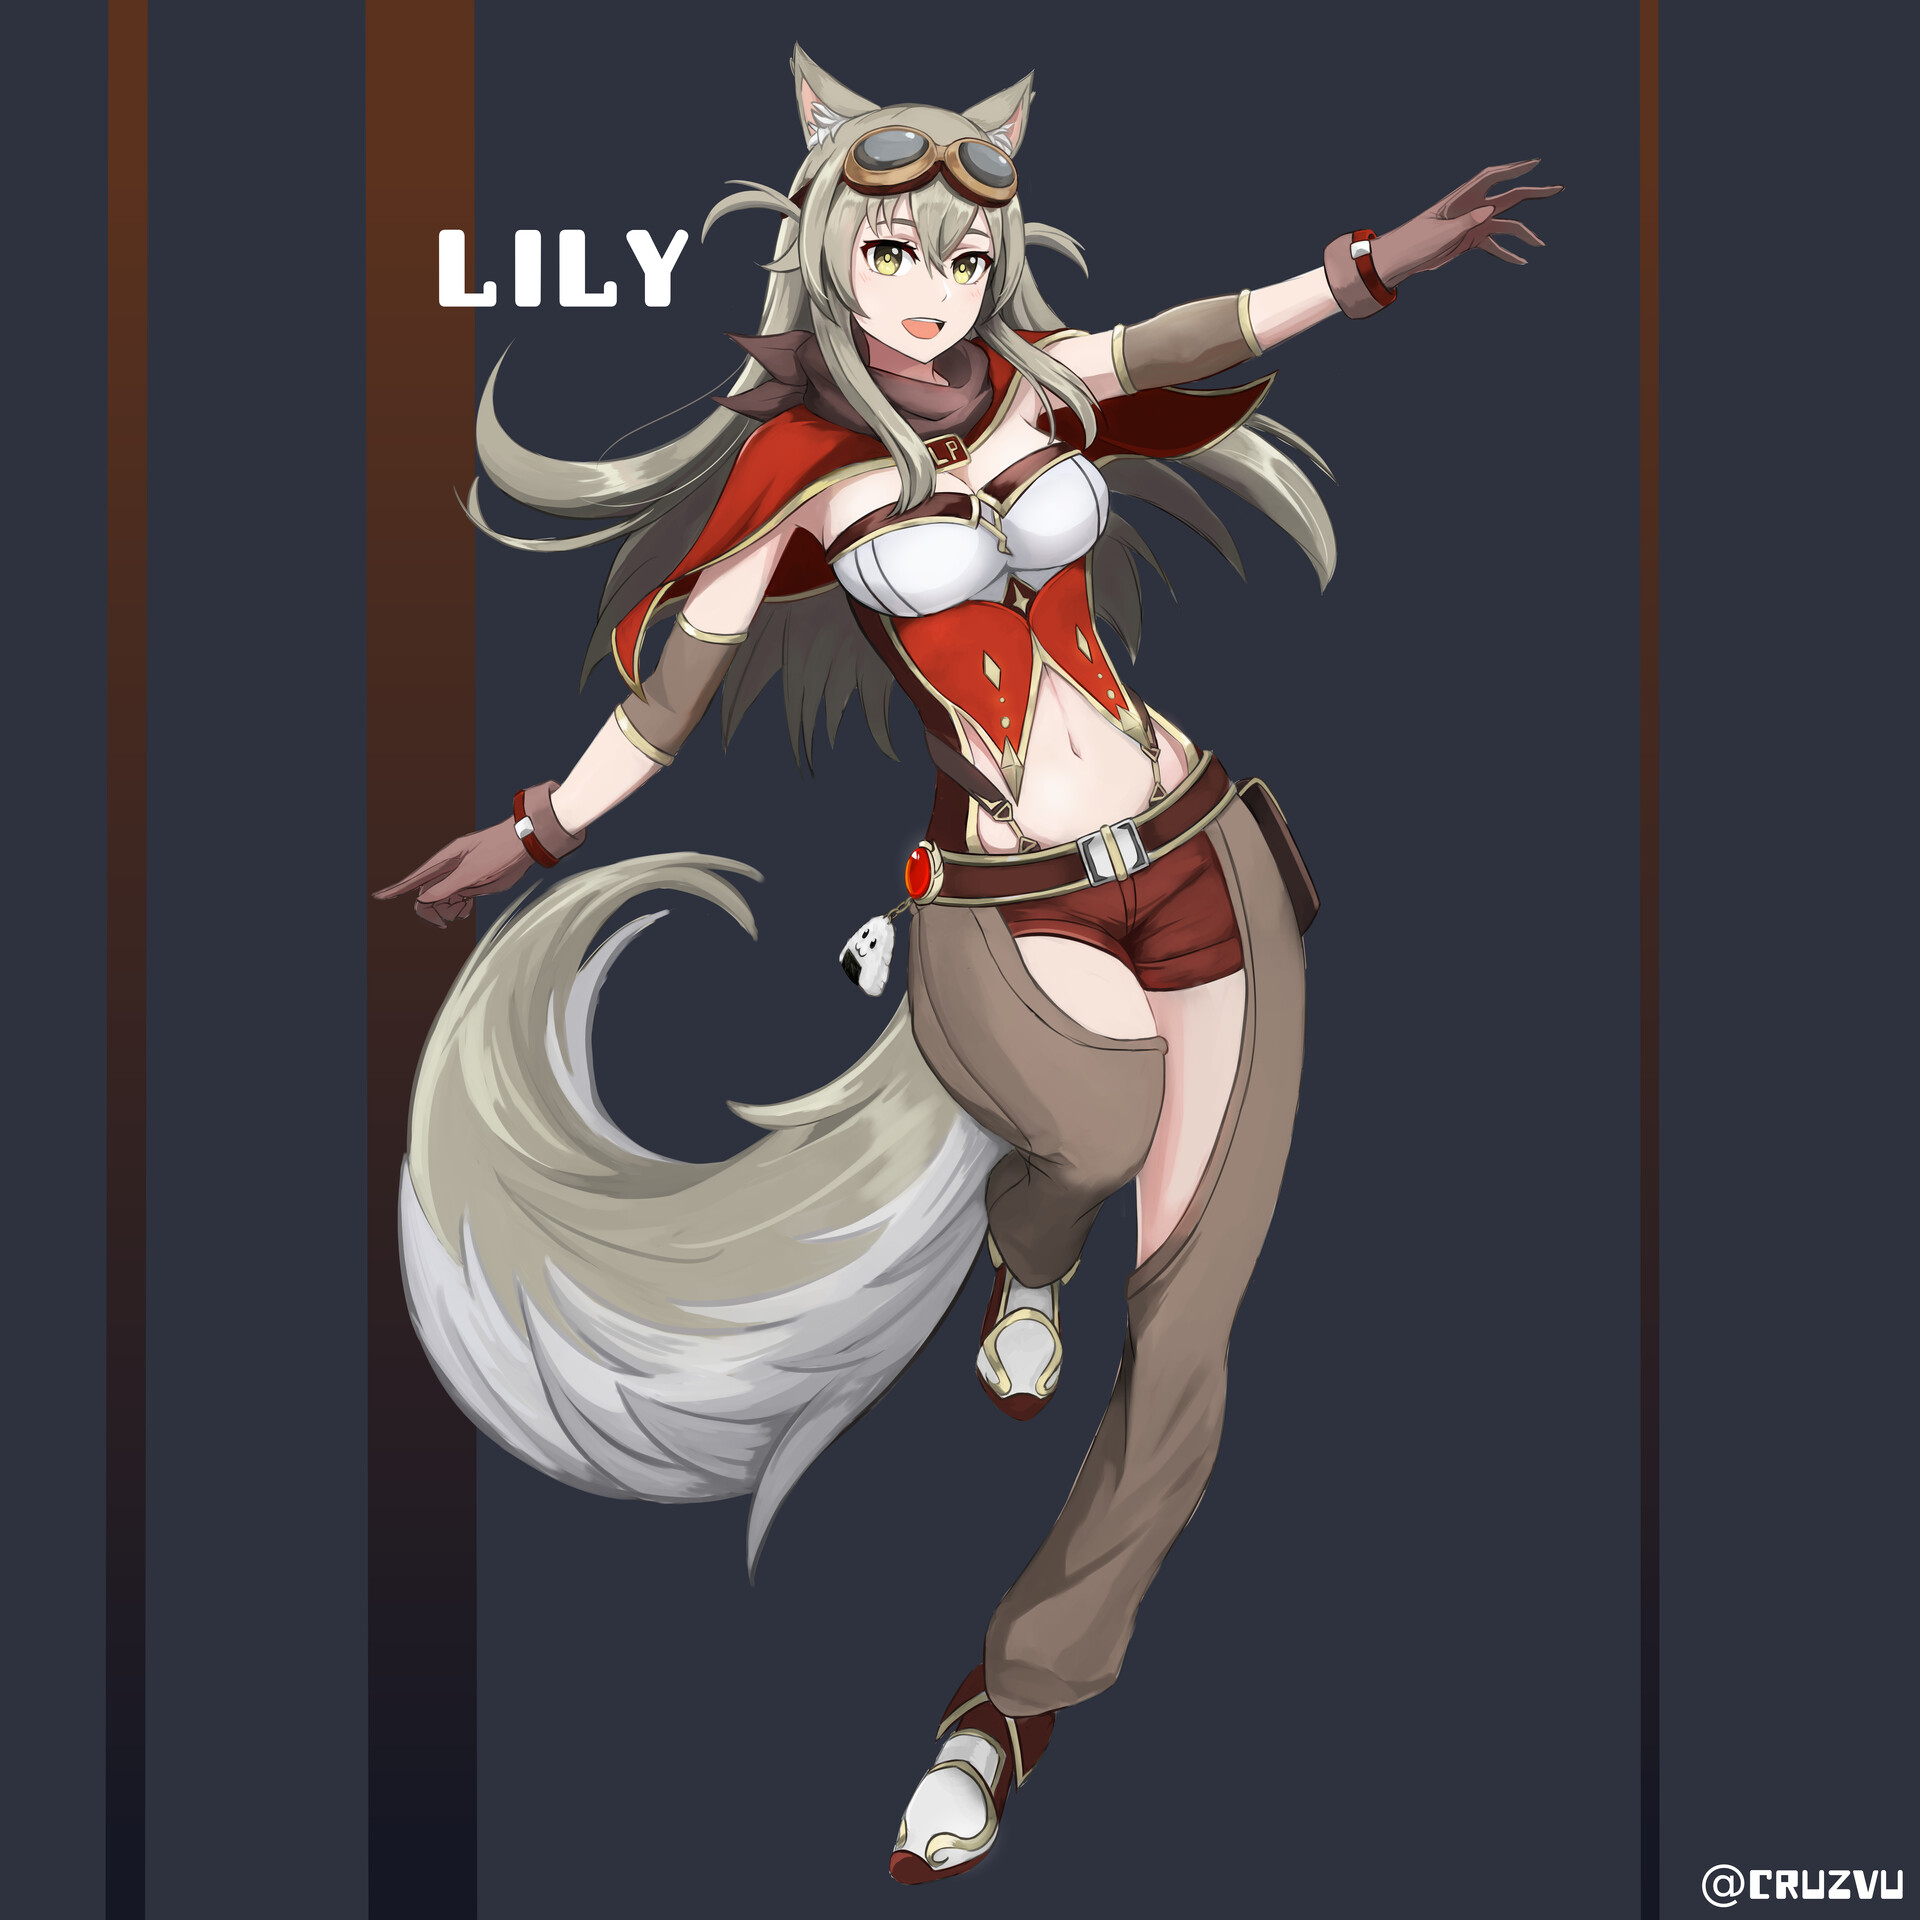 Lily fox. Lily the Fox Mechanic. Lily Fox механик Манга. Fox girl Lily.